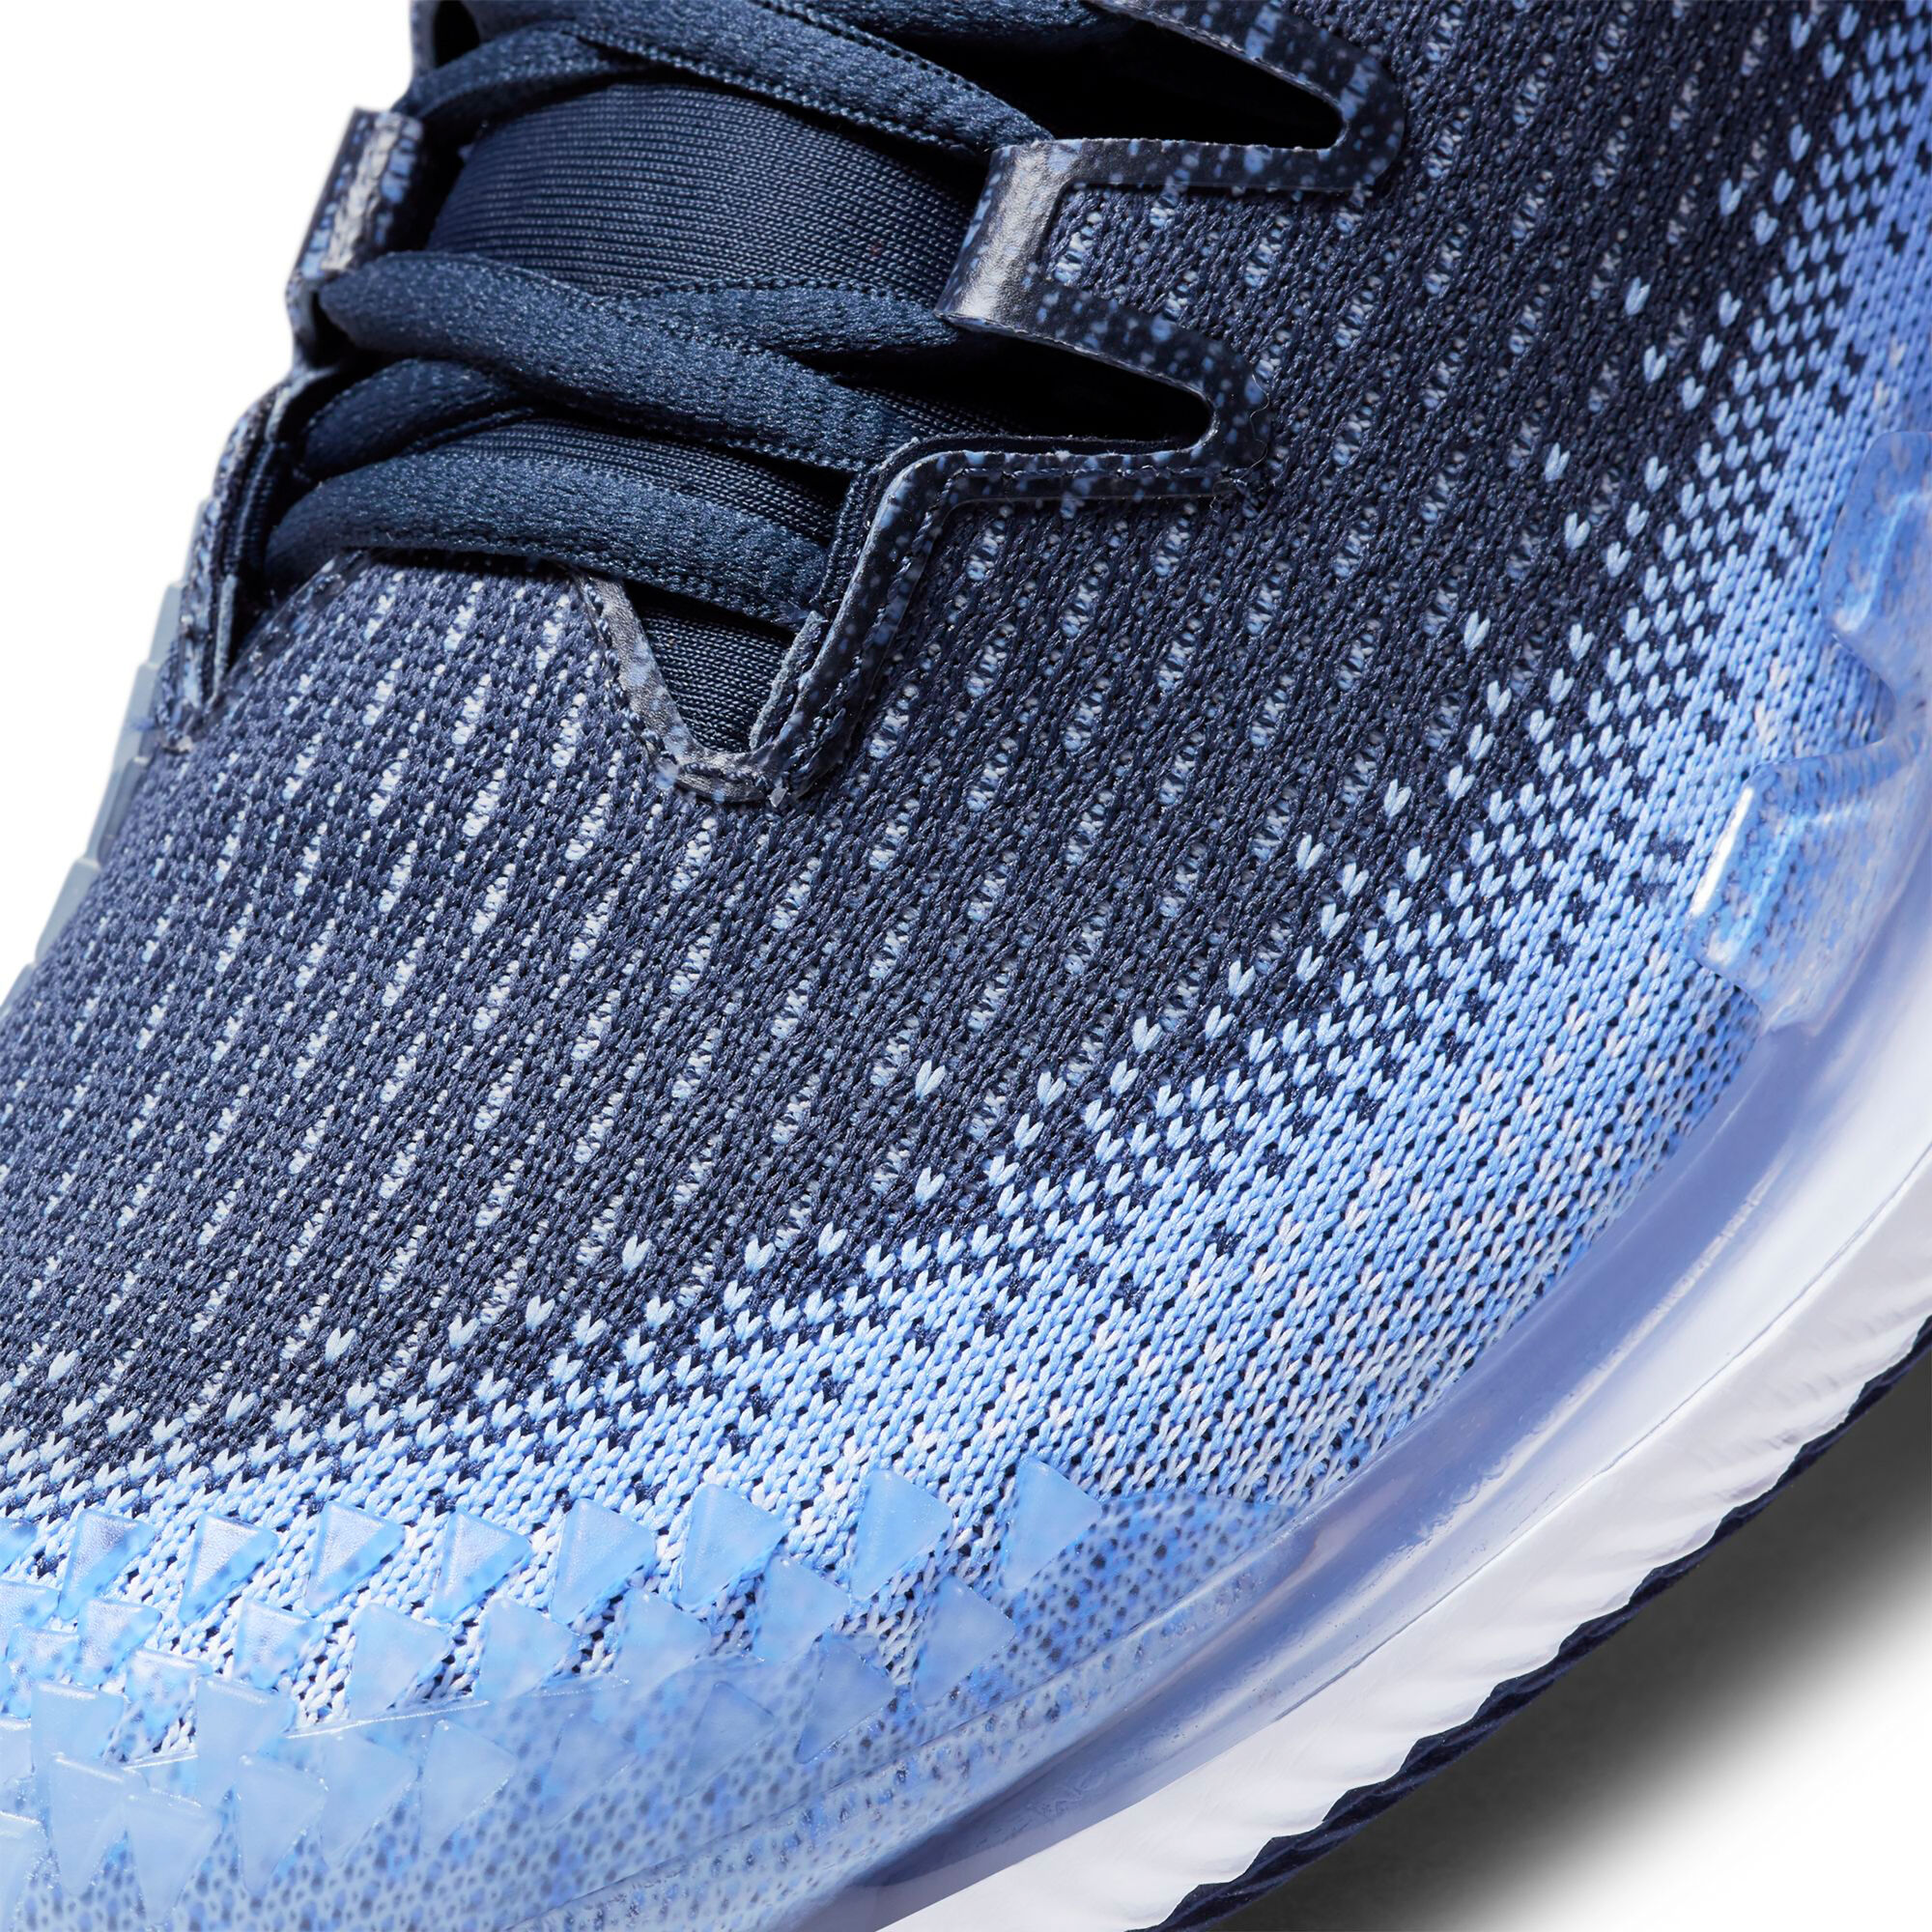 Nike Air Zoom Vapor X Knit All Court Shoe Light Dark Blue online | Tennis-Point